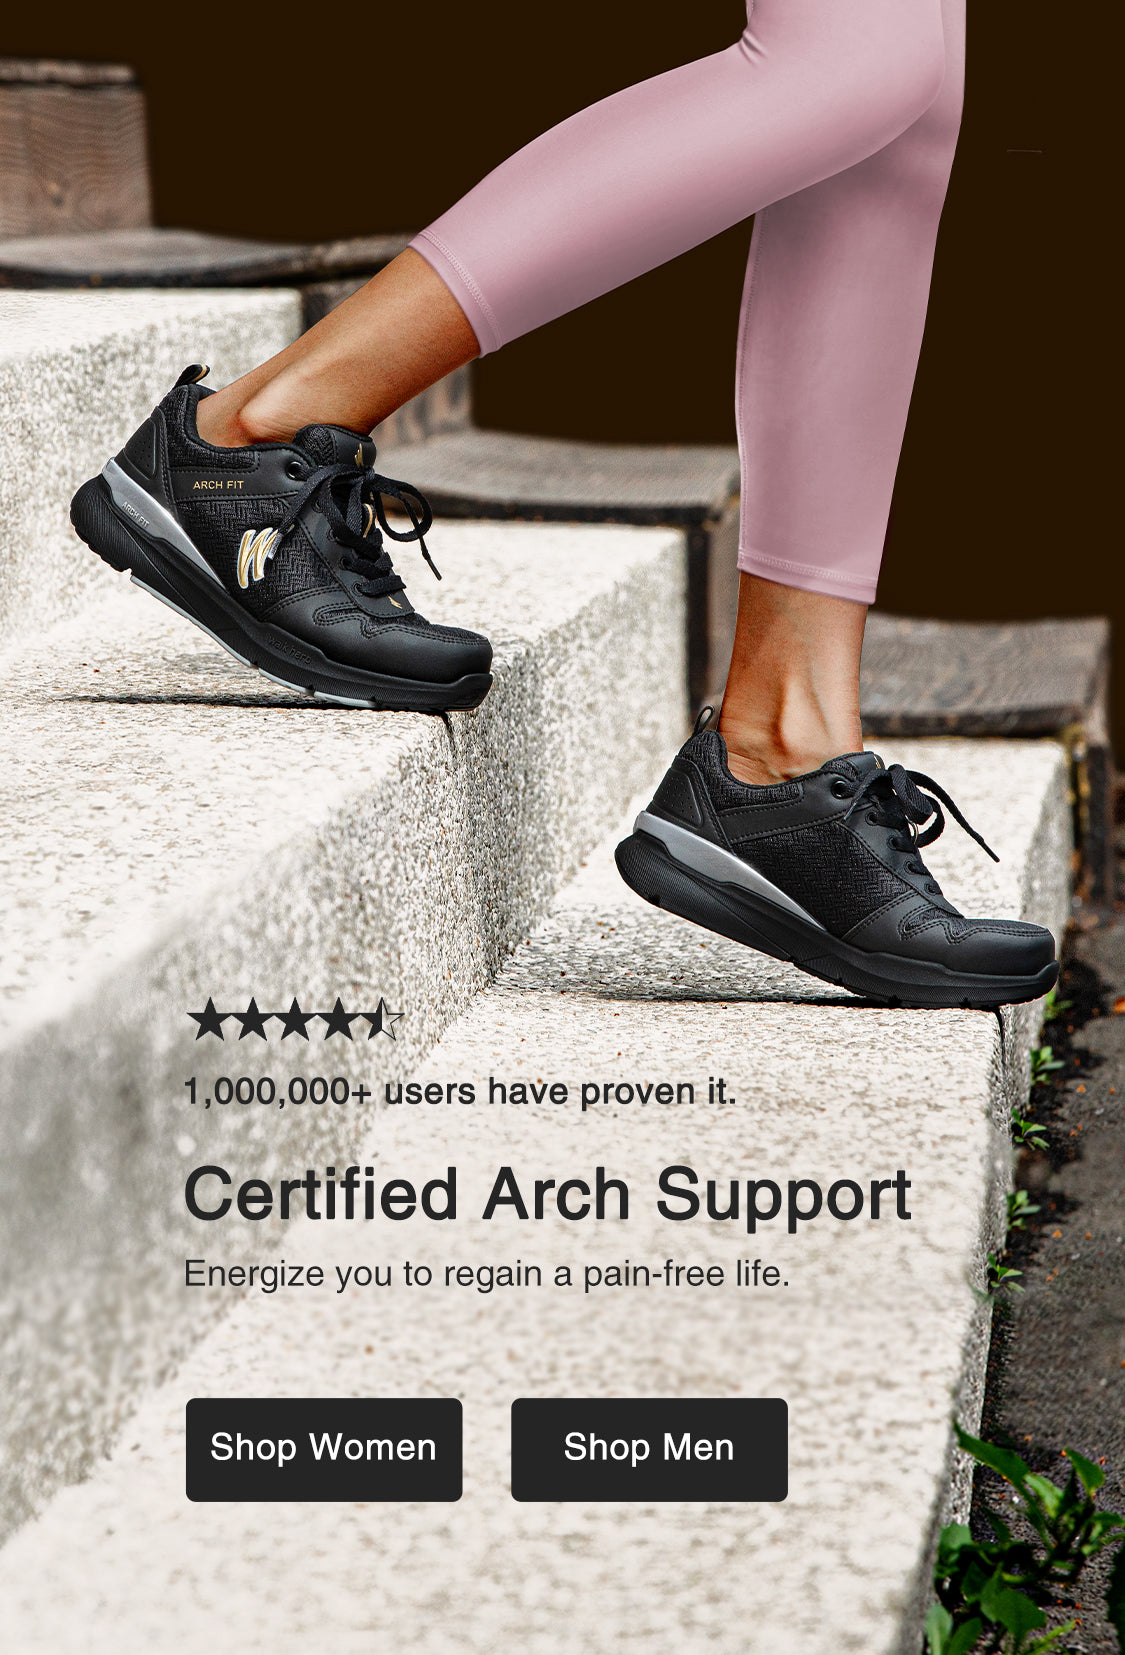 LOTTO RACCHETTA Walking Shoes For Men - Buy LOTTO RACCHETTA Walking Shoes  For Men Online at Best Price - Shop Online for Footwears in India |  Flipkart.com